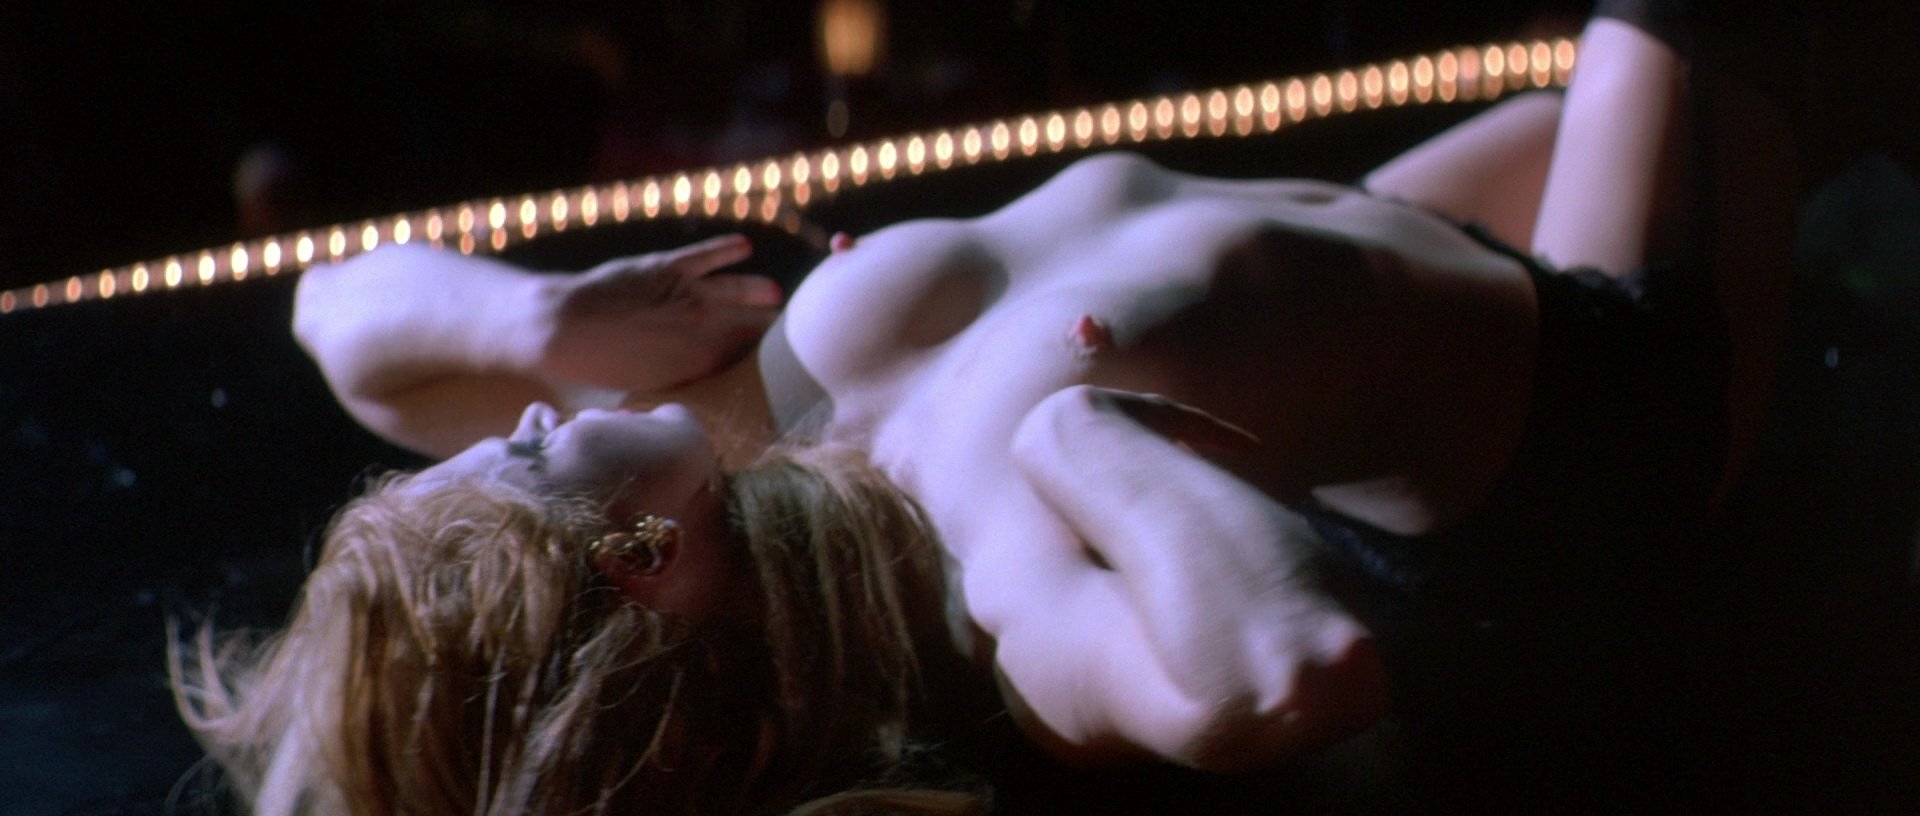 Джессика Честейн nude pics.